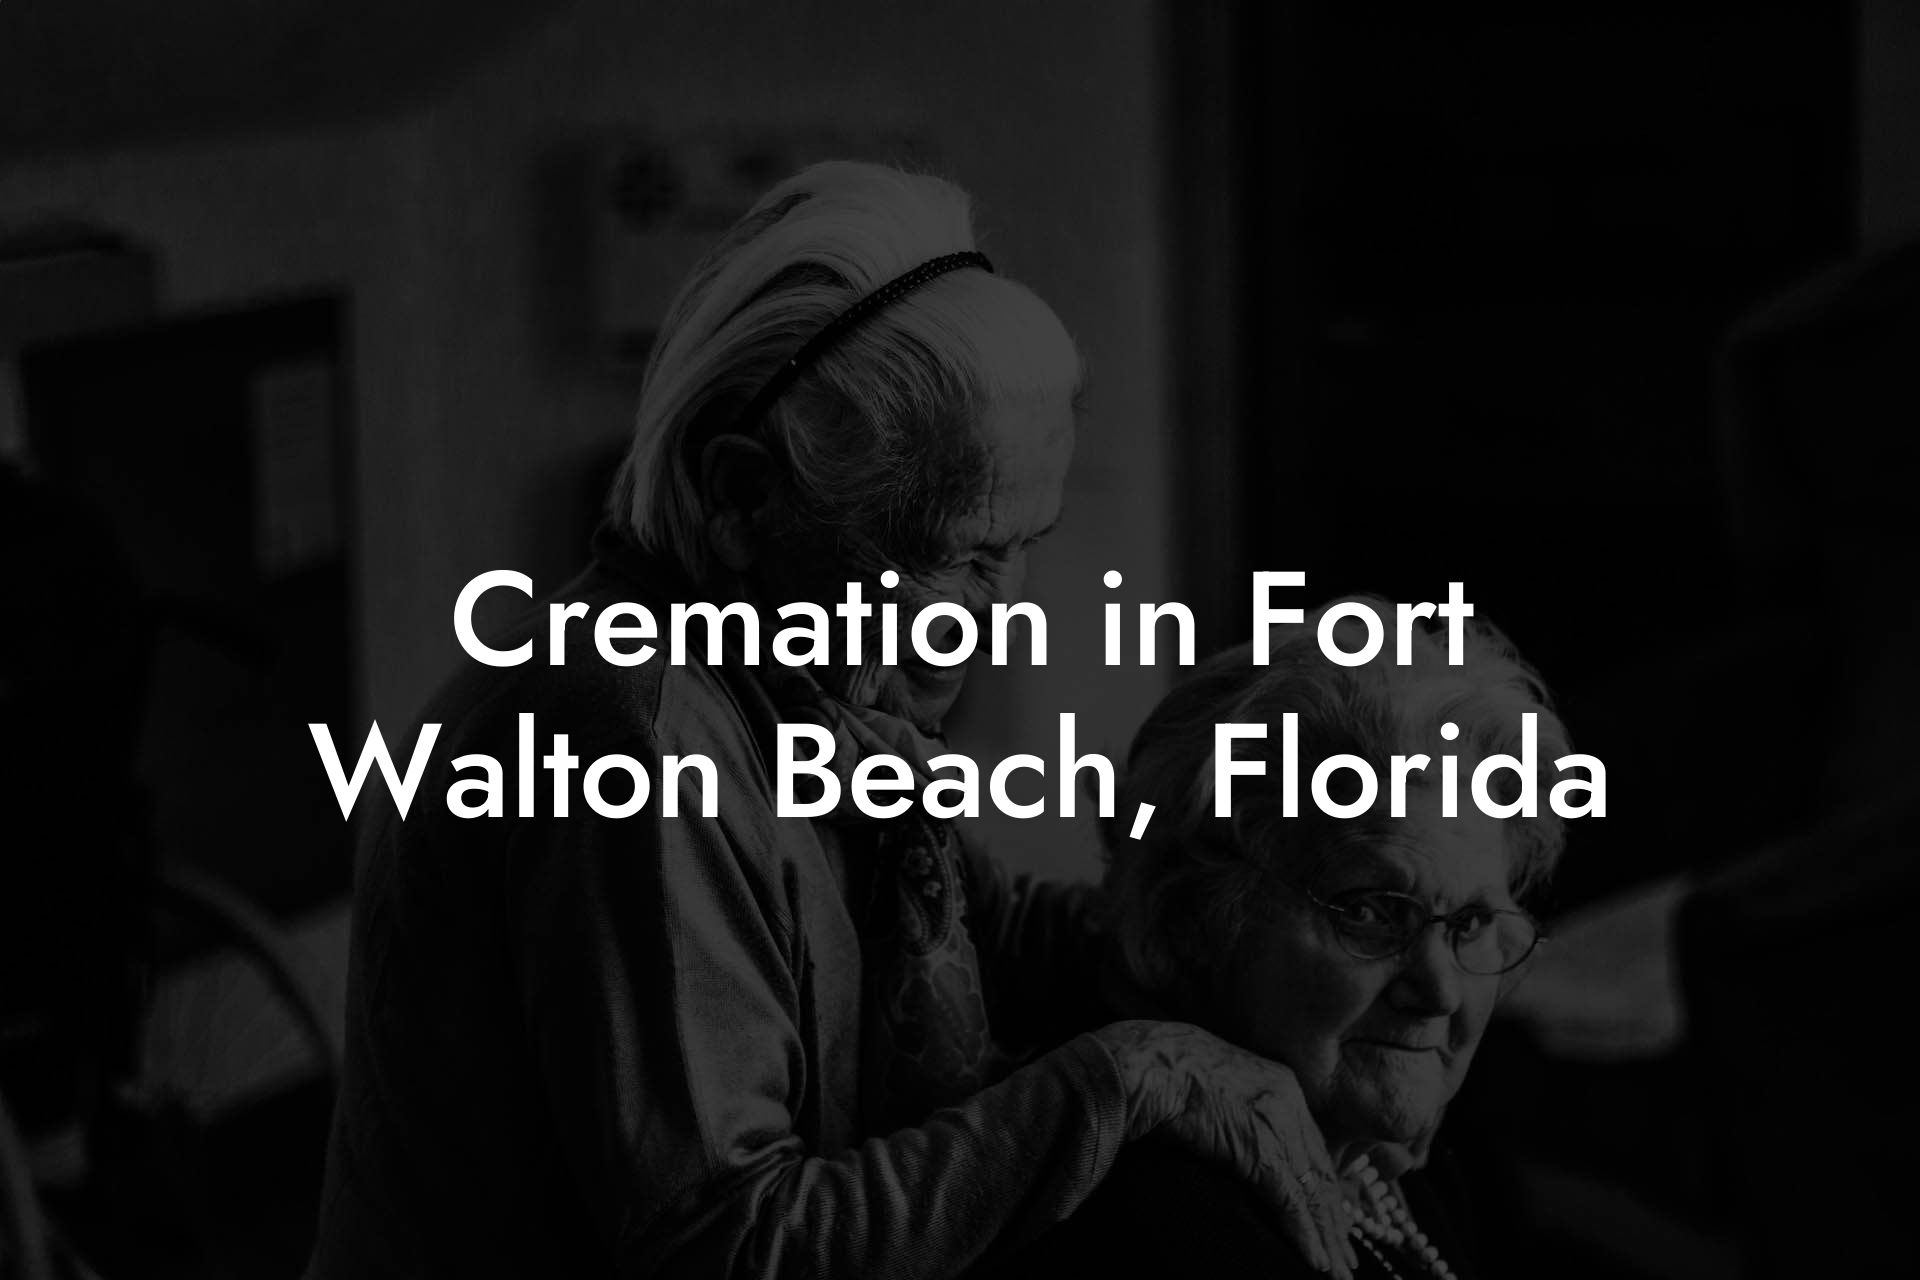 Cremation in Fort Walton Beach, Florida